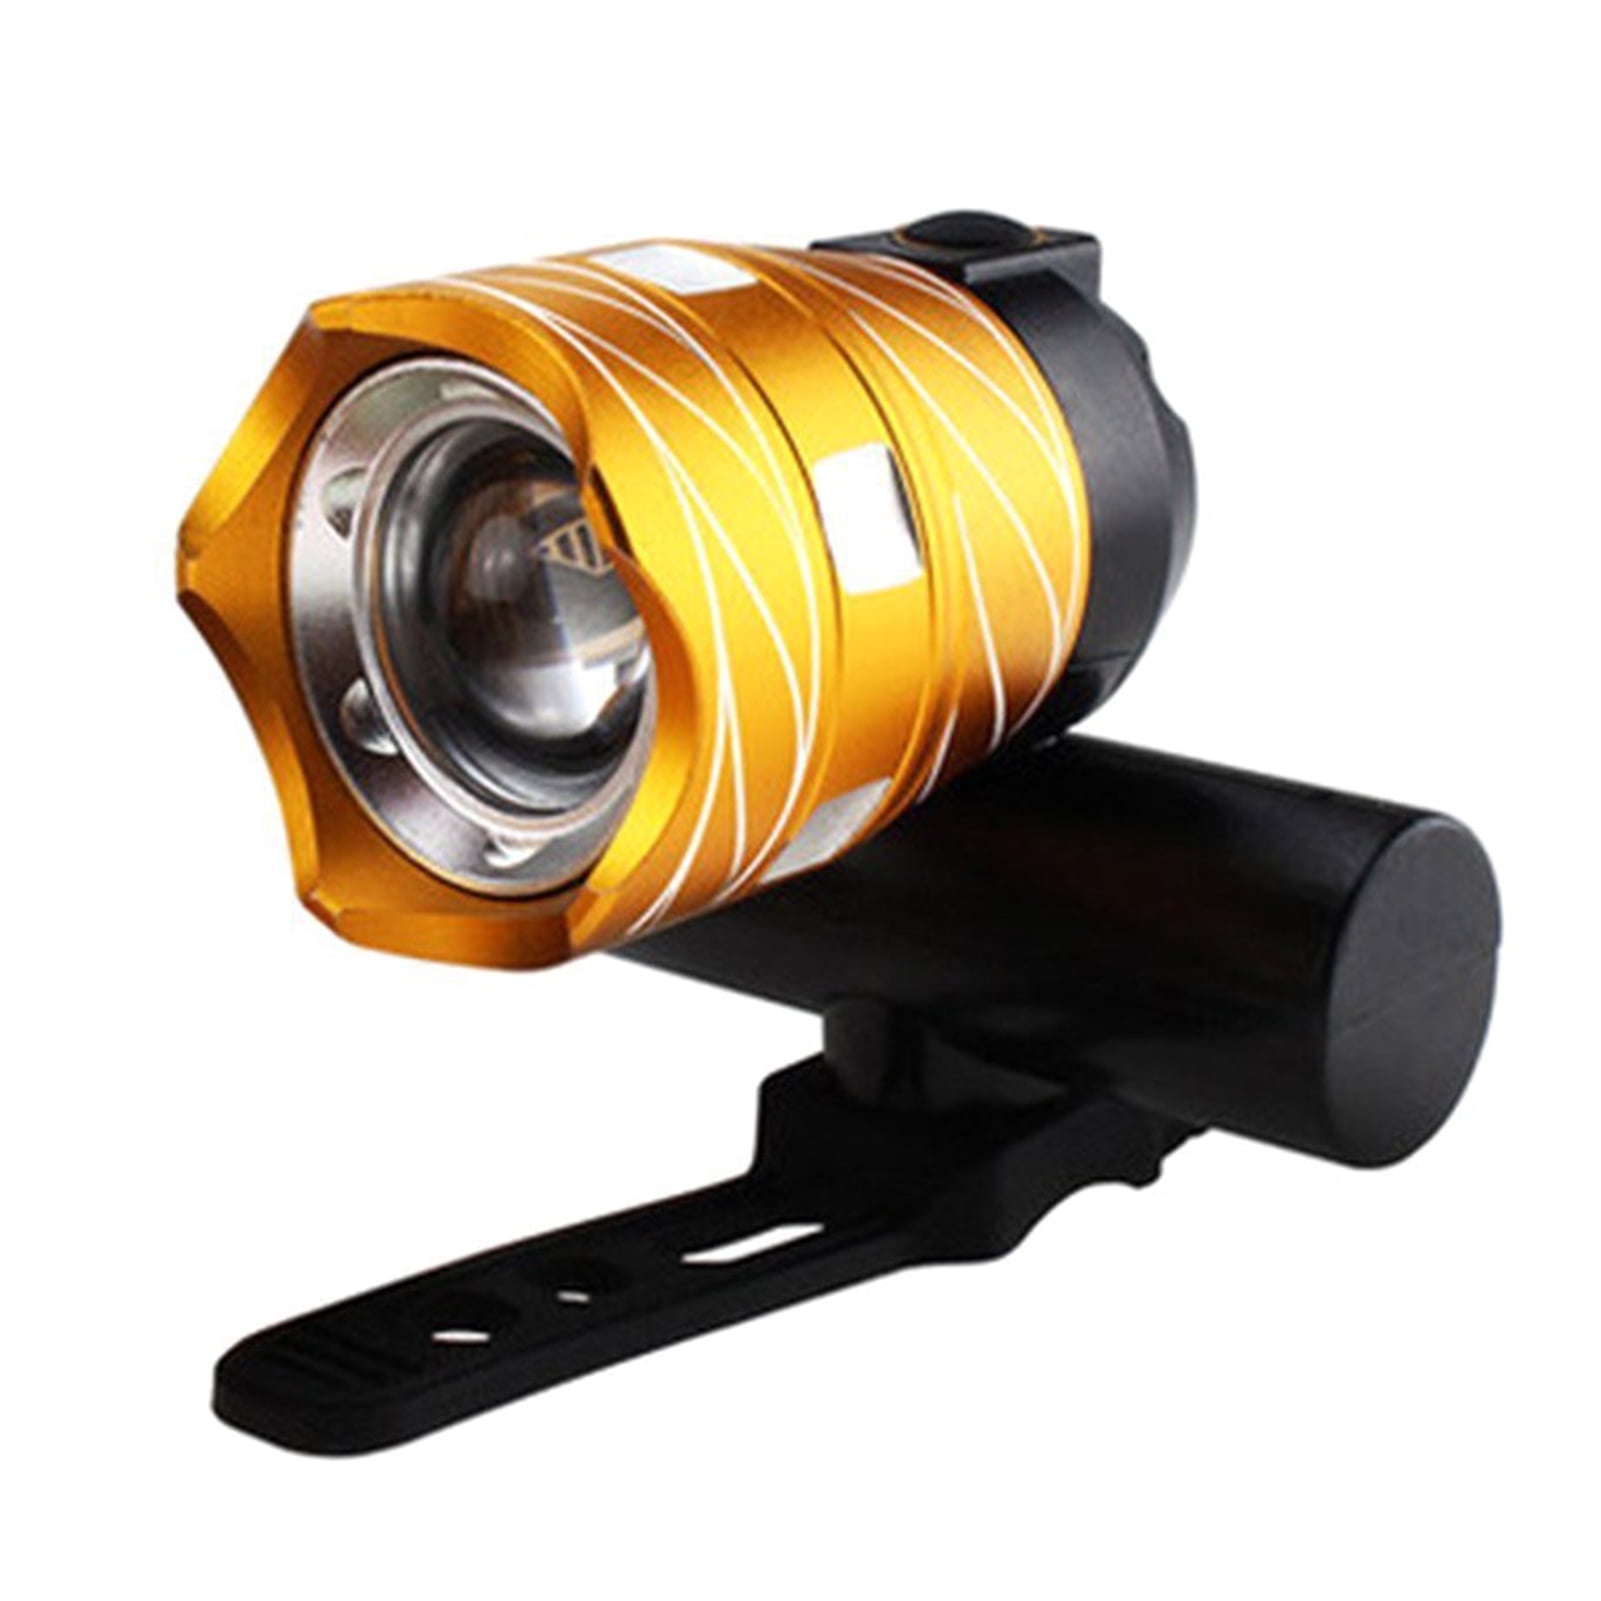 Details about   Bike LED Light USB Charging Bicycle Headlight Waterproof Flashlight 1200mAh Lamp 